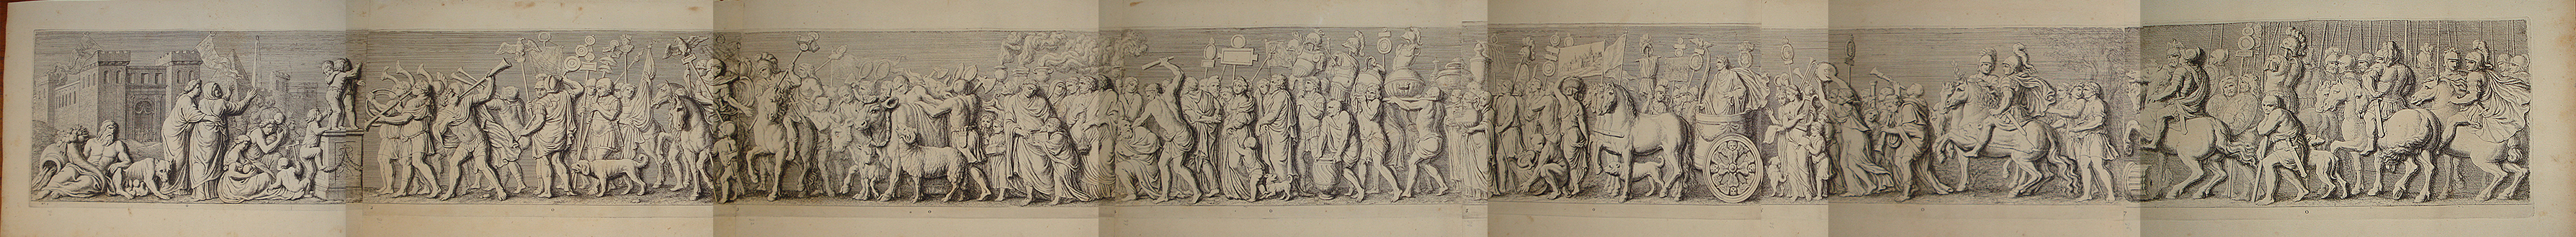 Arrivo trionfale di Vespasiano a Roma - Hubertus Quellinus